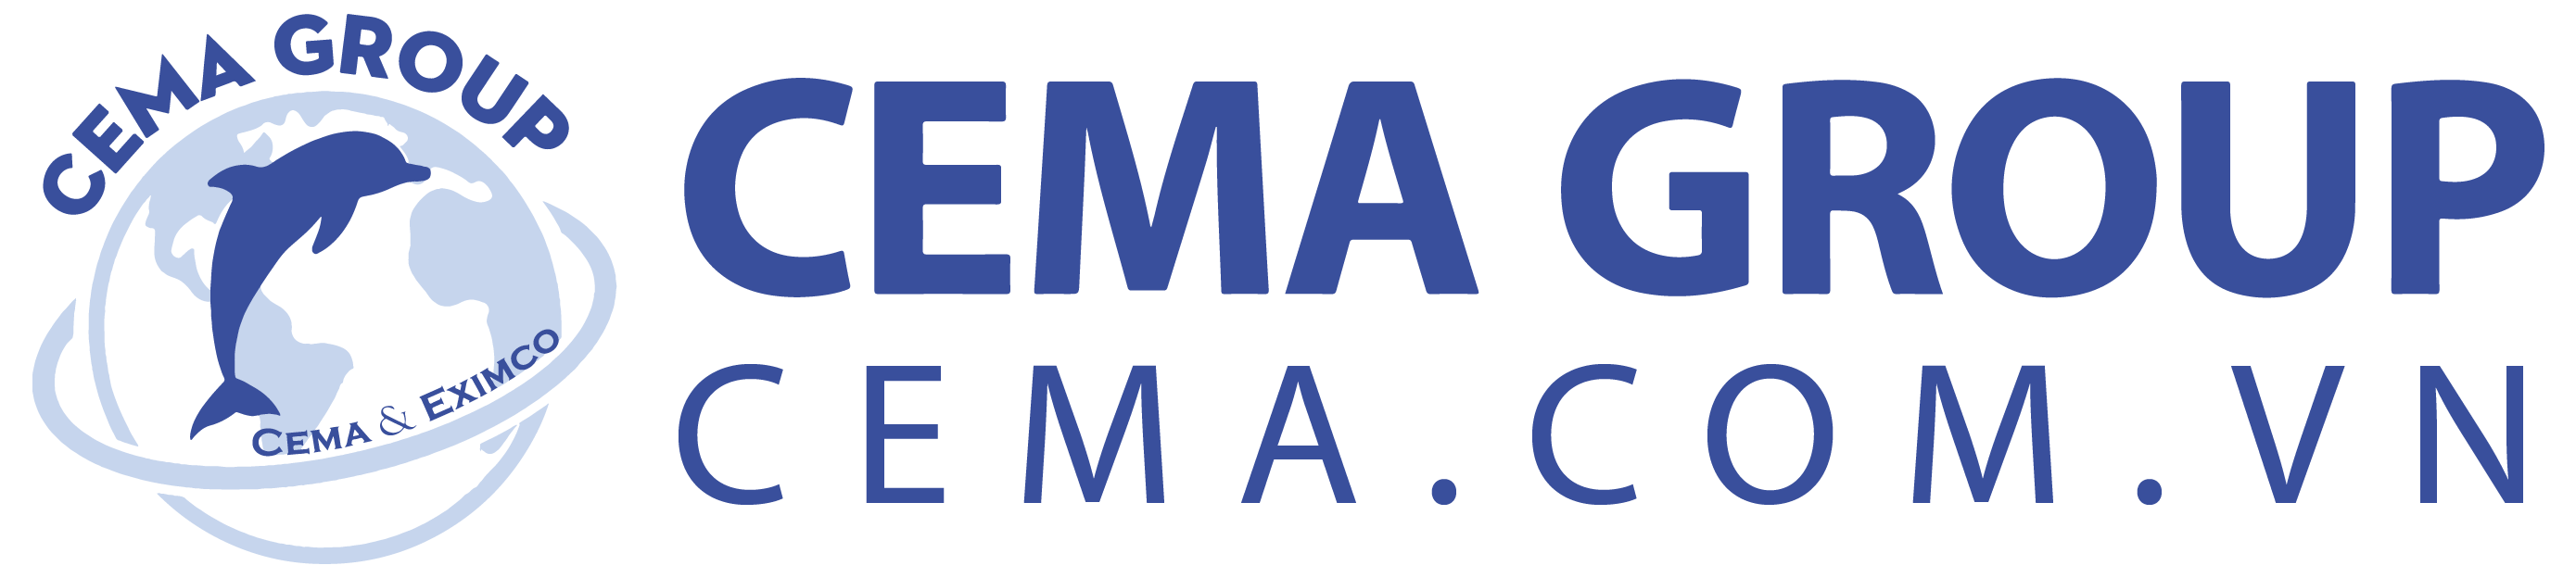 CEMA – Cema Group